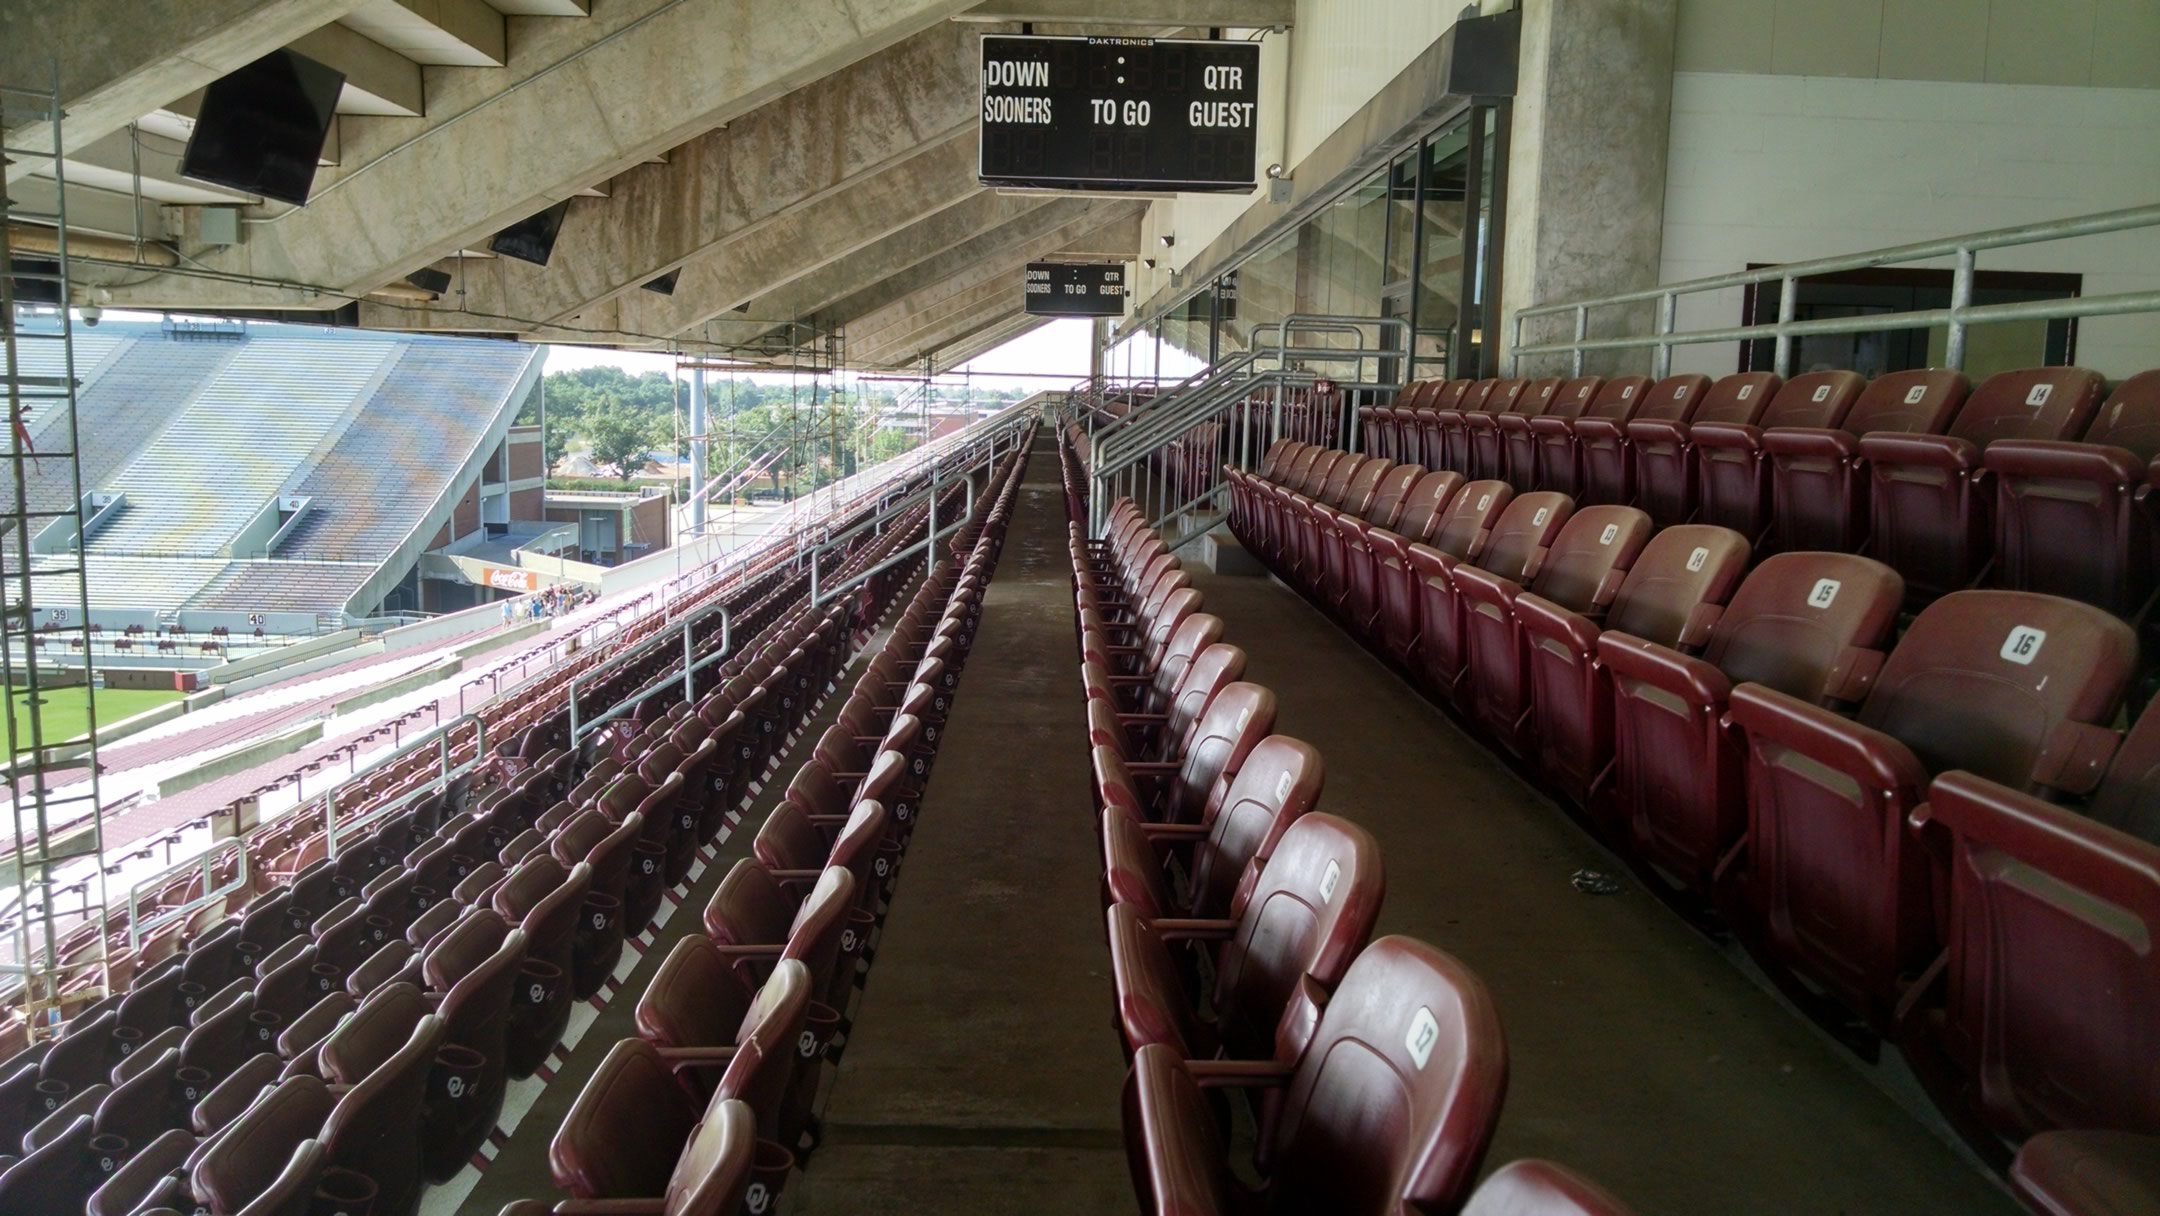 Gaylord Memorial Stadium Seating Chart Rows